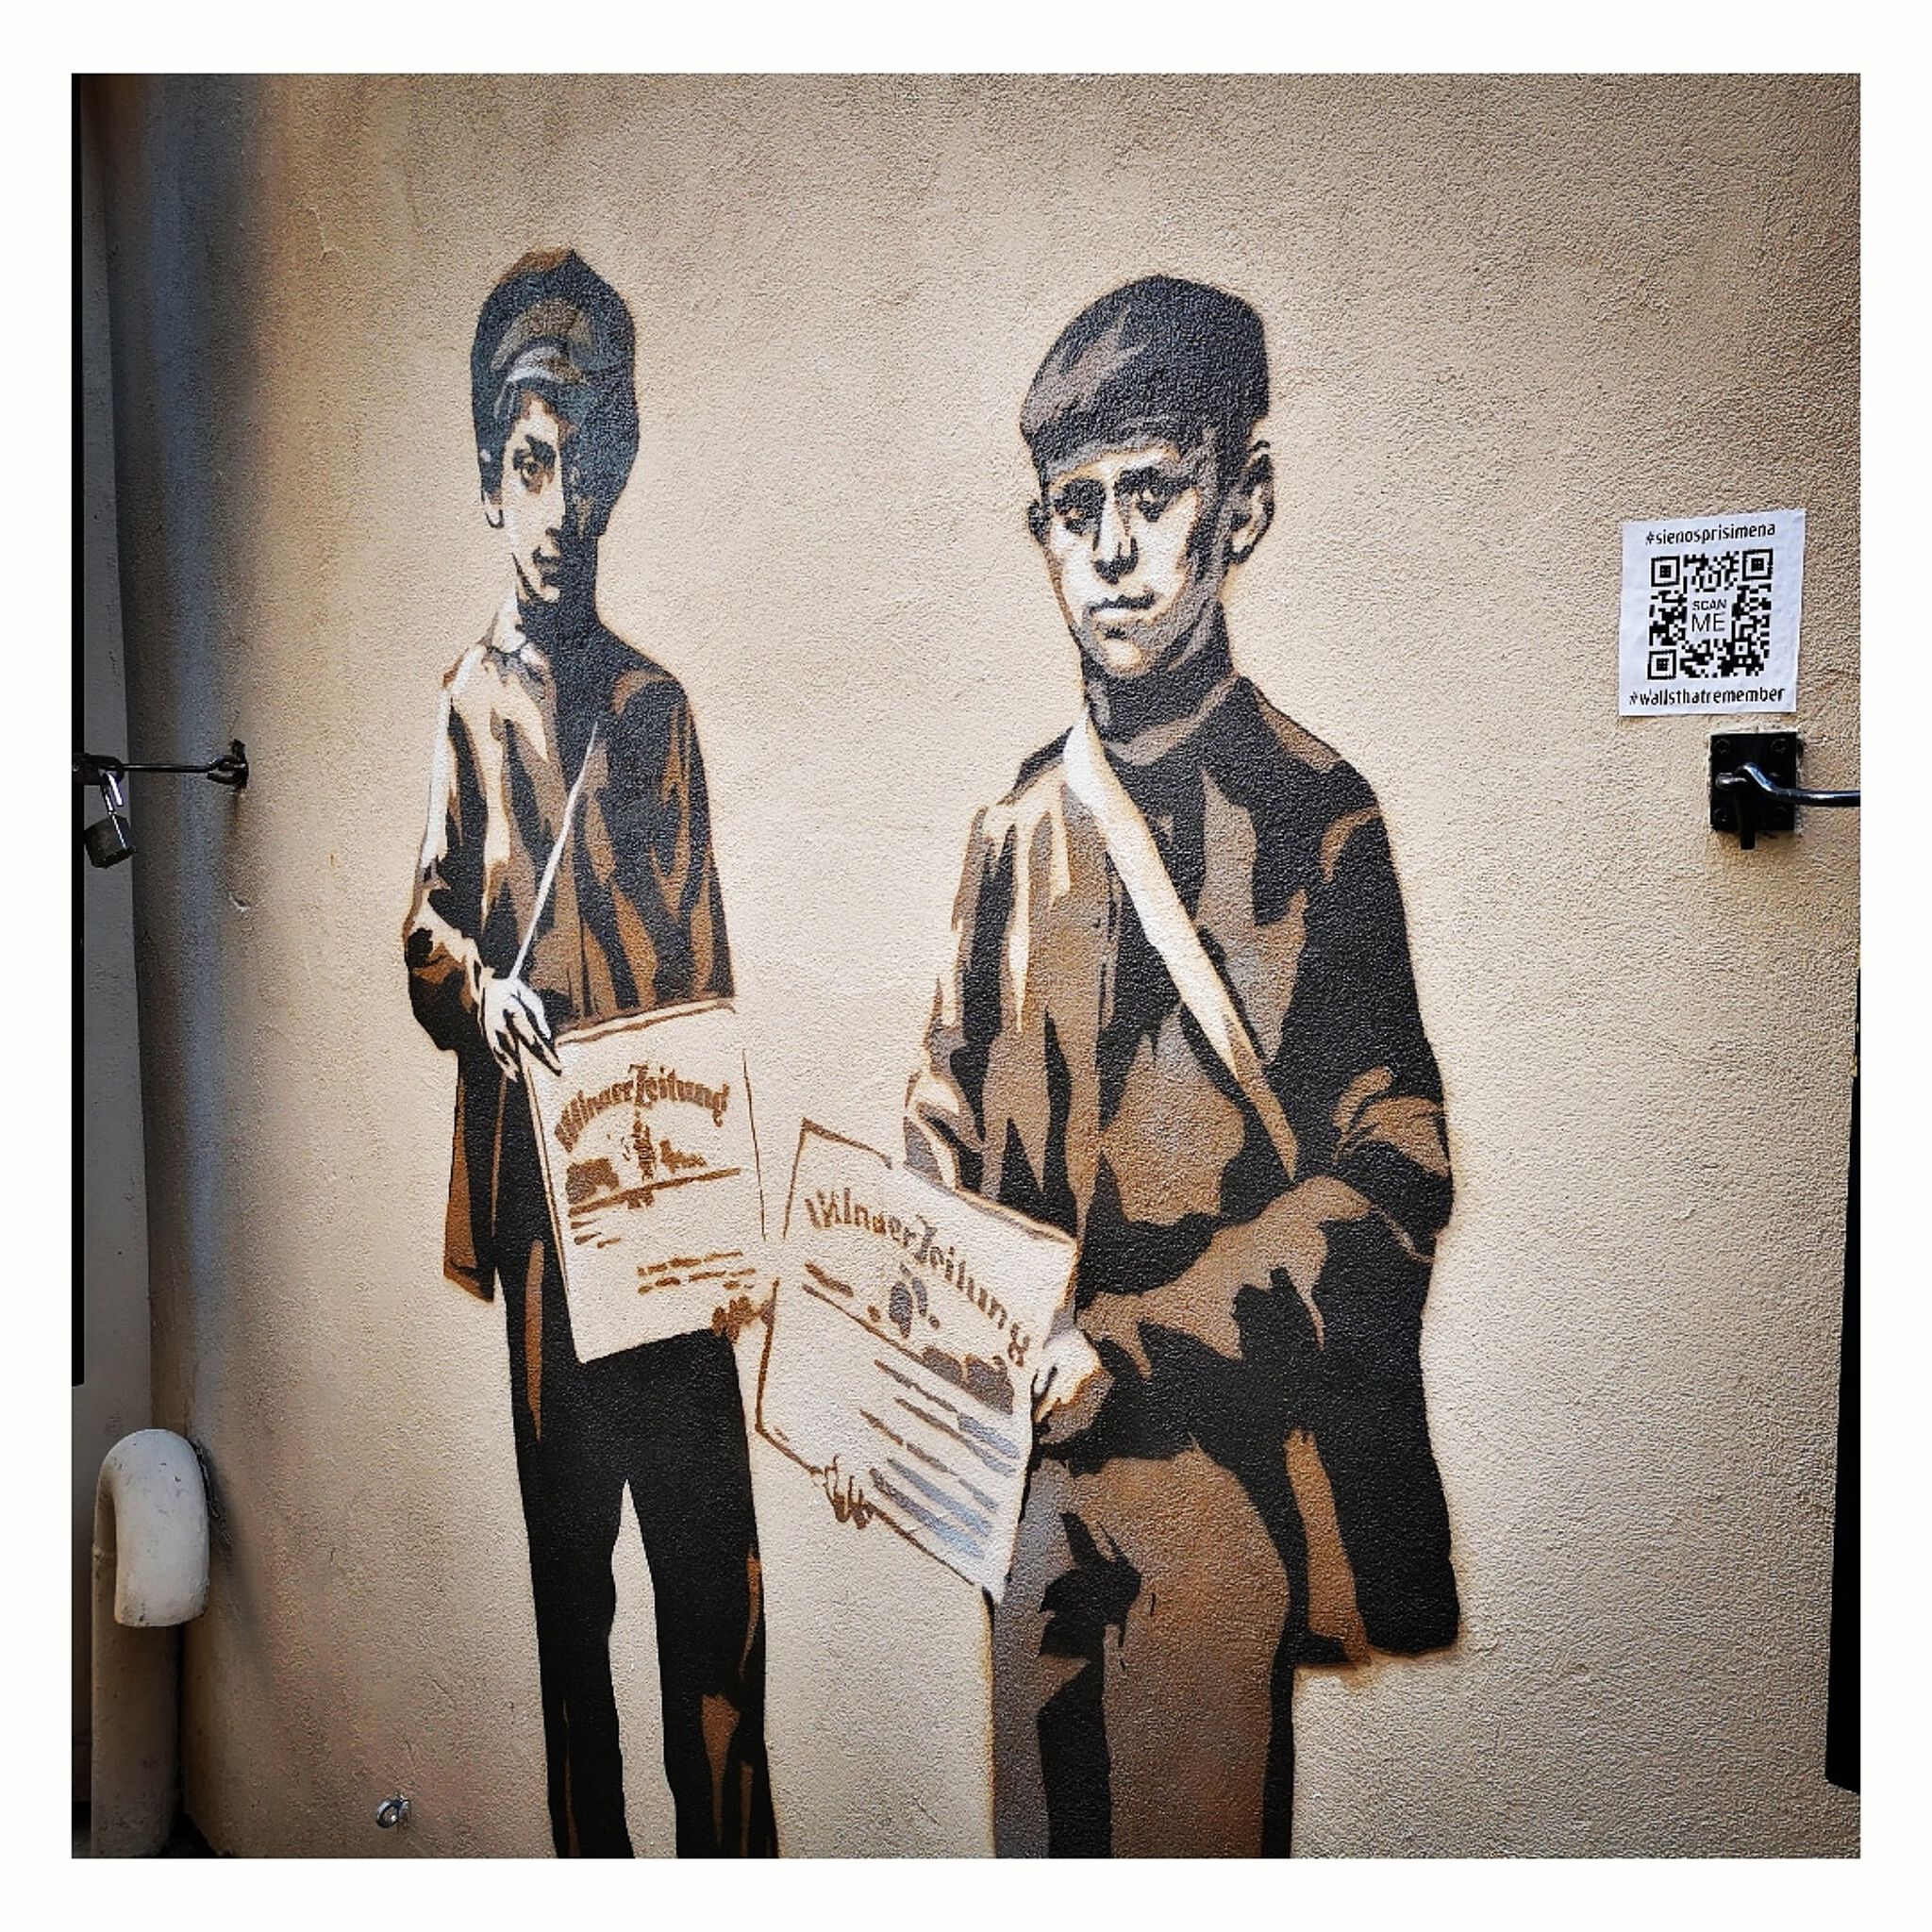 Sienos prisimena / Walls that remember&mdash;The Paper Boys